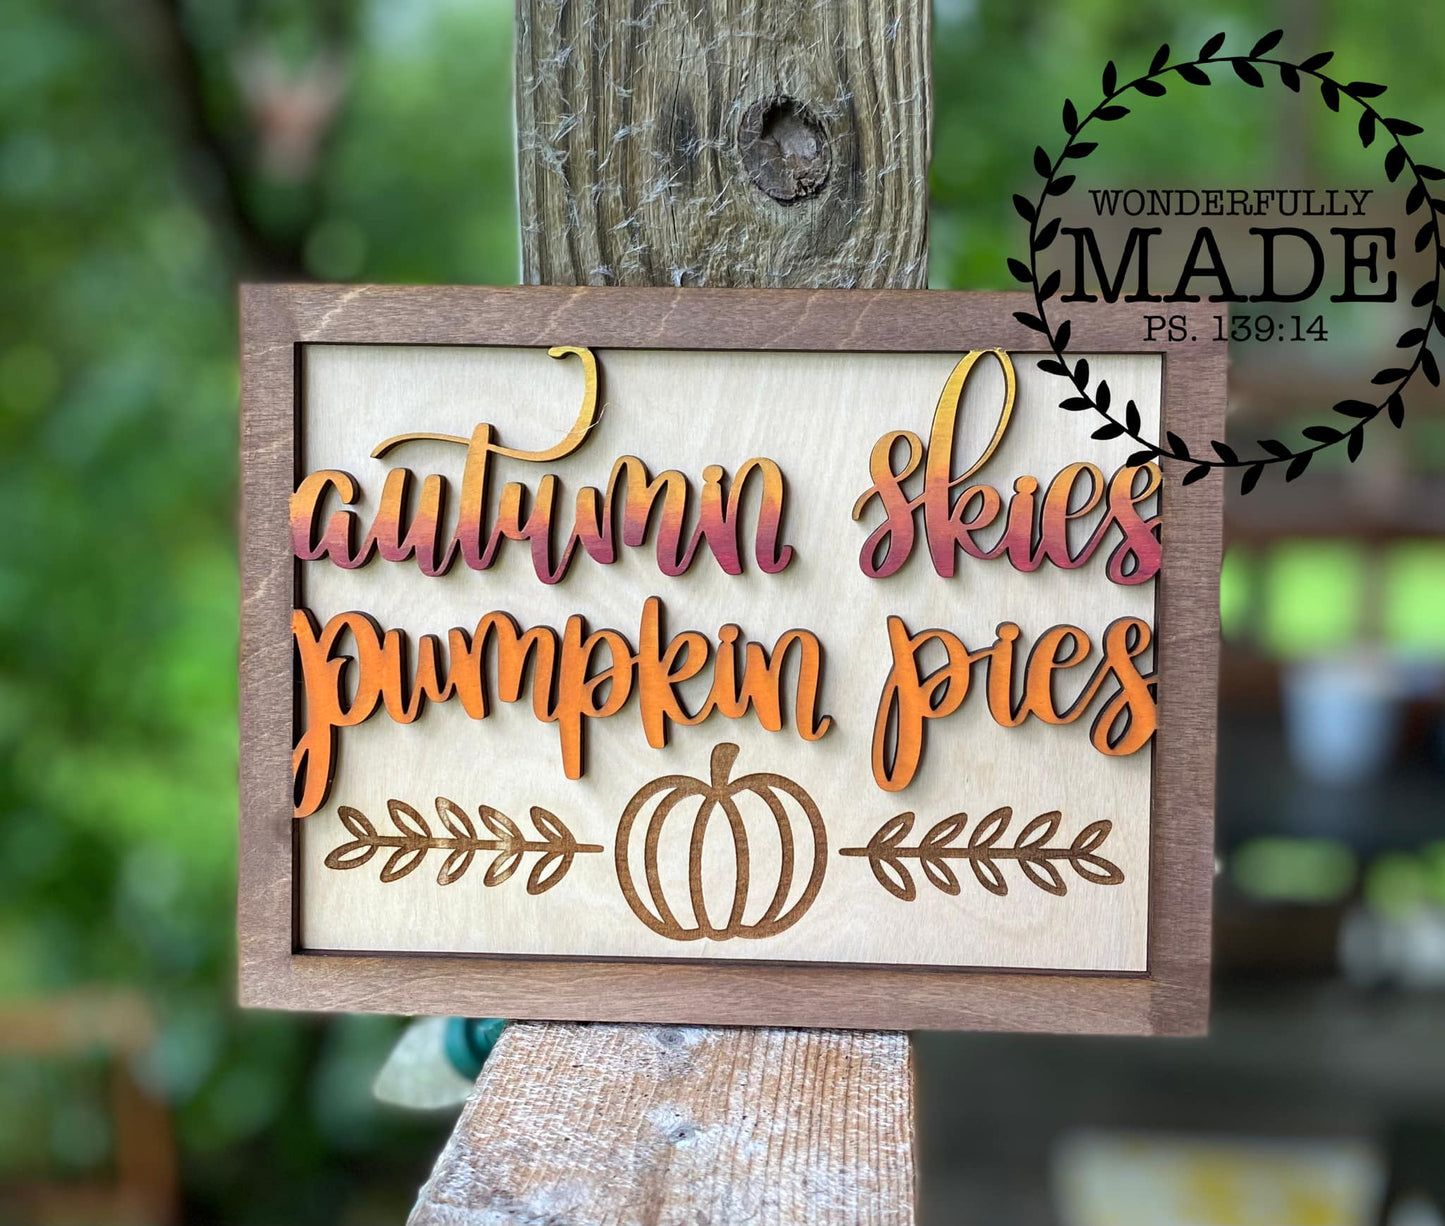 Autumn Skies Pumpkin Pies Tabletop Sign